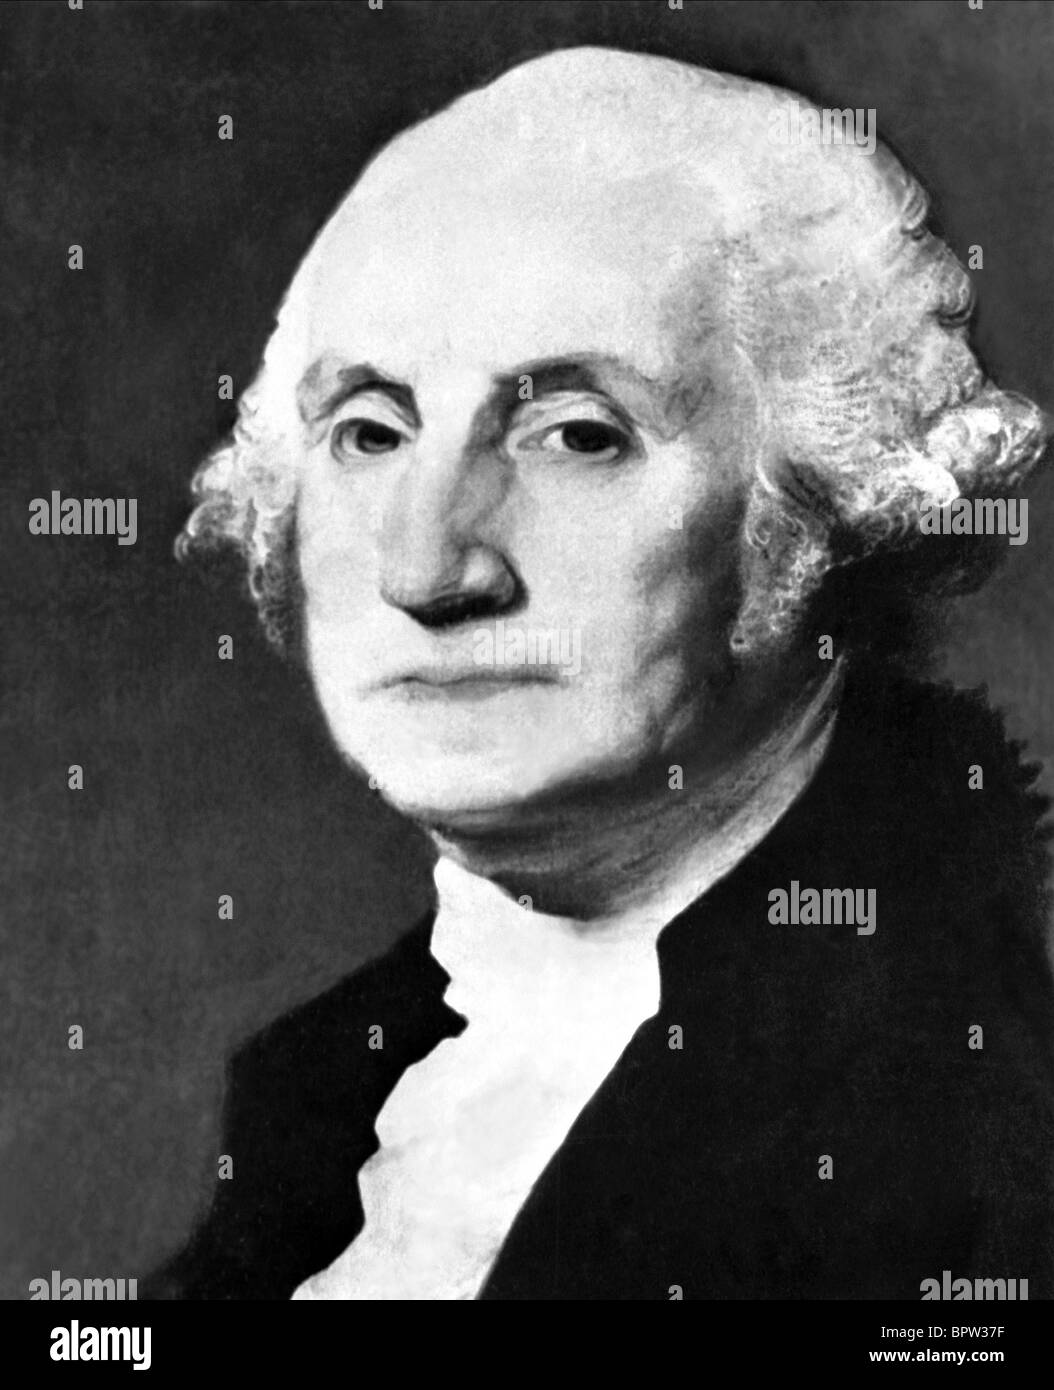 GEORGE WASHINGTON PRESIDENT OF THE USA 1732-1796 Stock Photo